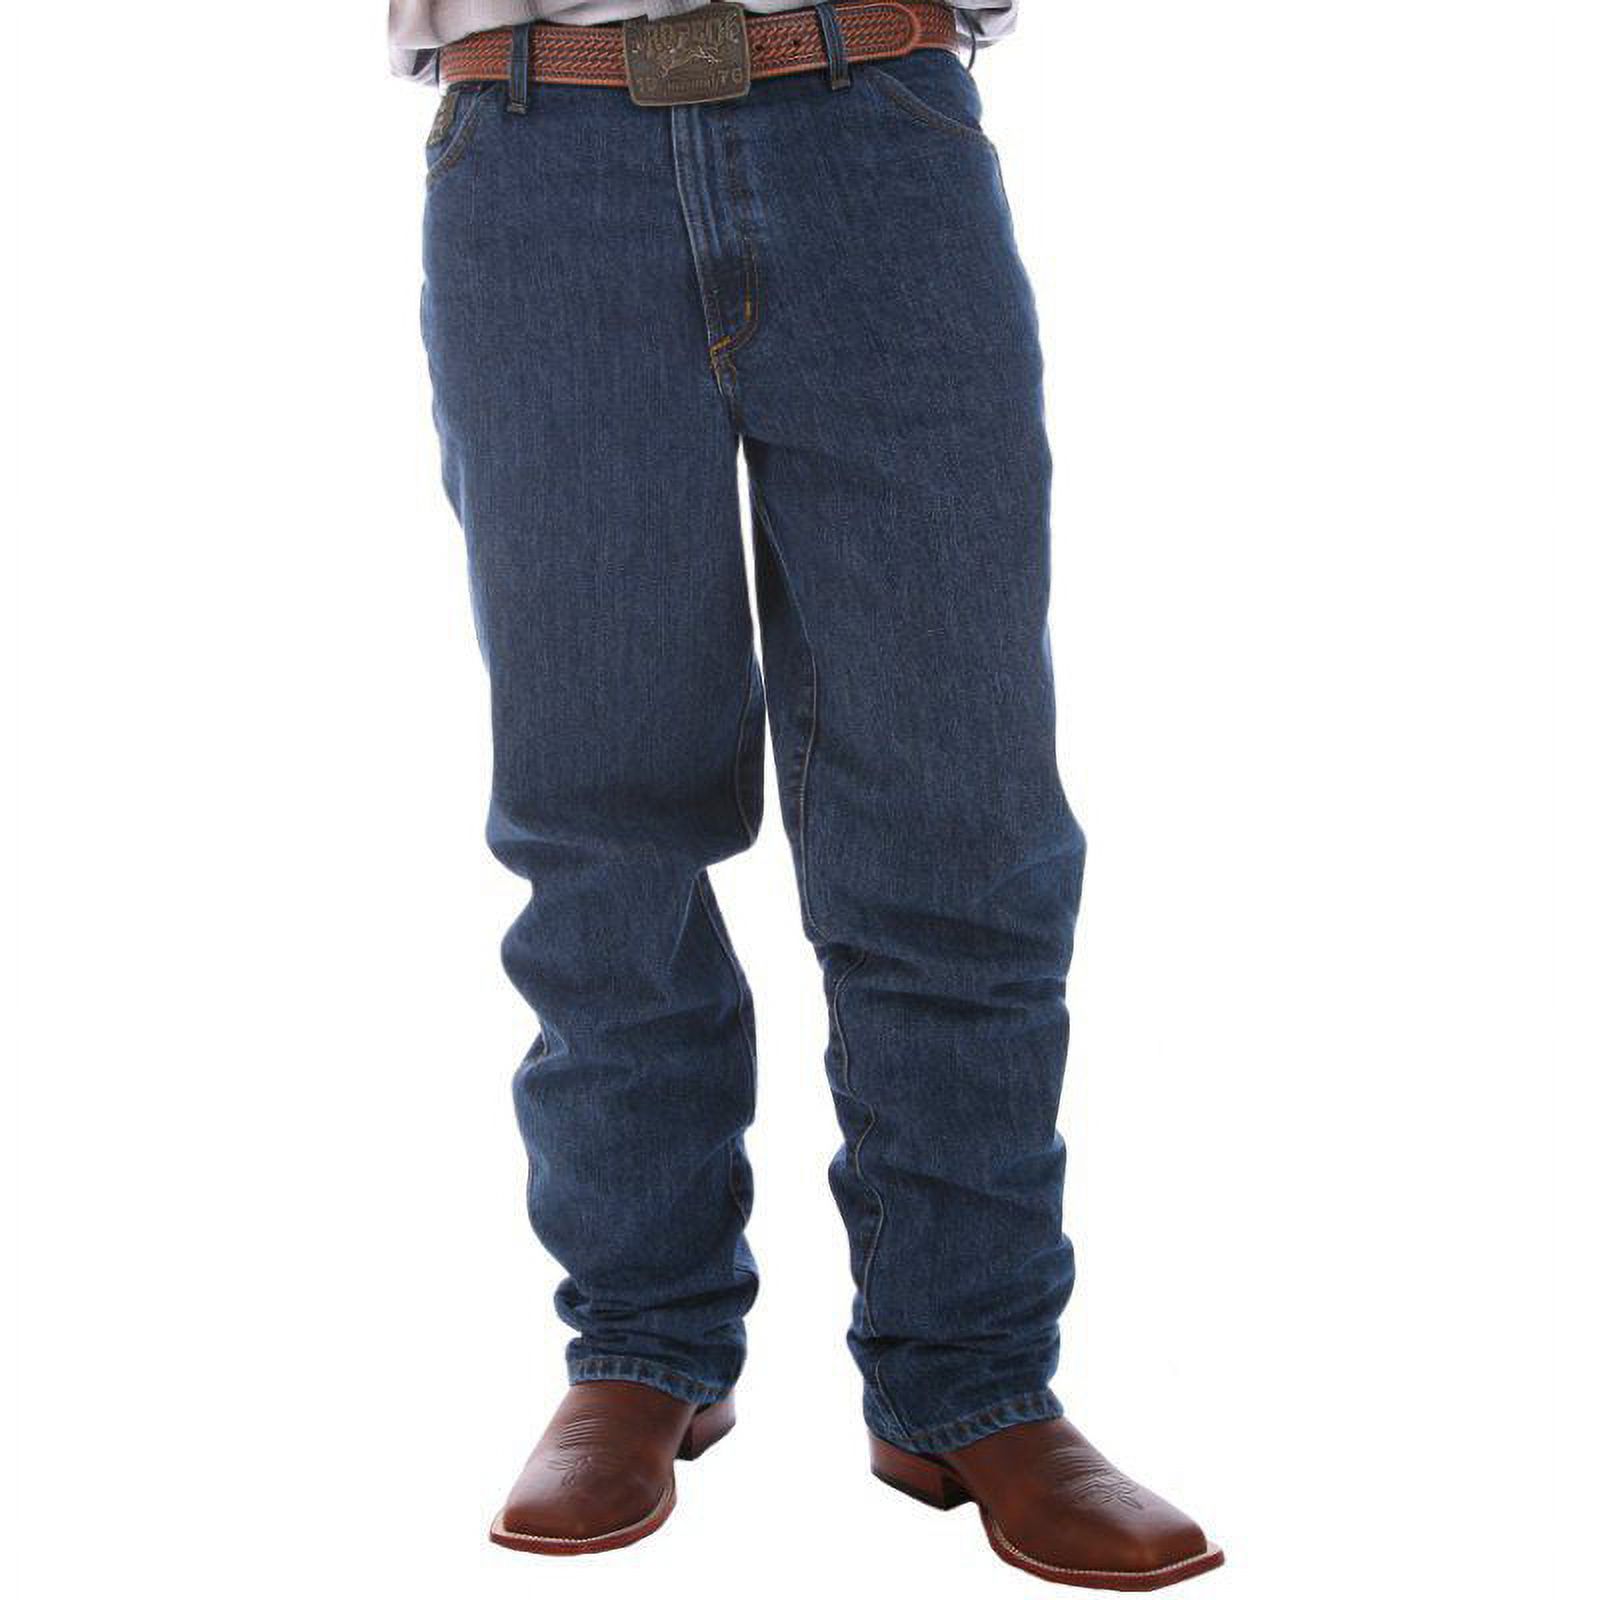 Cinch Apparel Mens Green Label Original Fit Jeans 40x36 Dark Stonewash - image 4 of 4